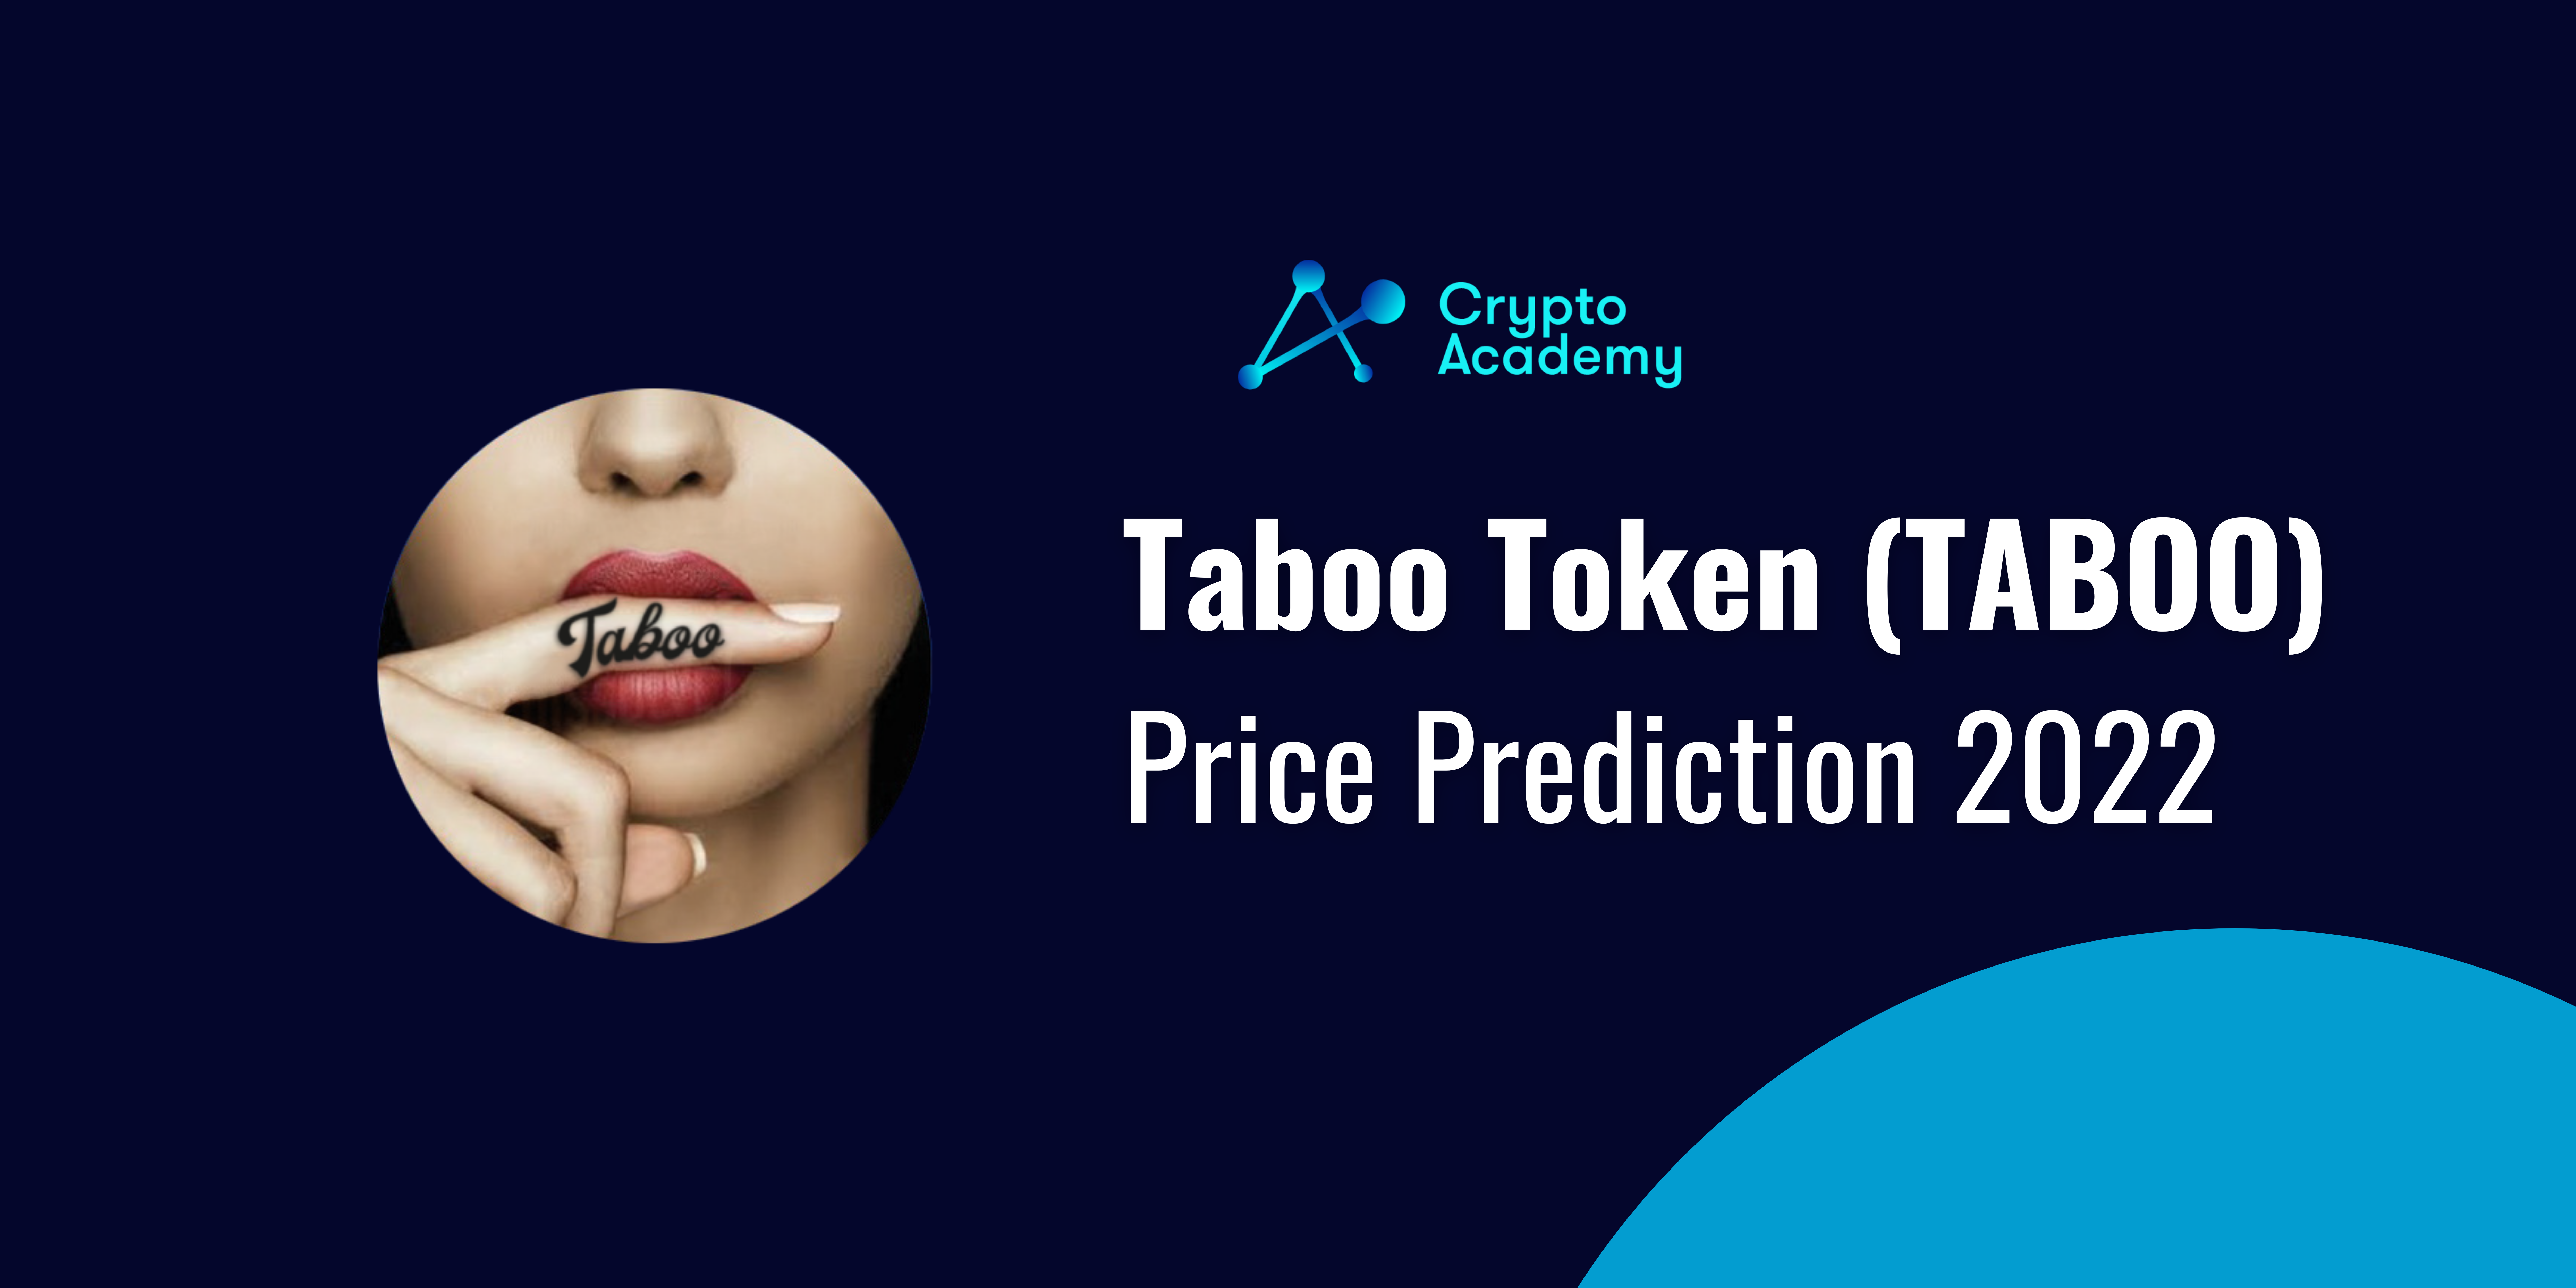 Taboo Token (TABOO) Price Prediction 2022 and Beyond - Can TABOO Hit $1?